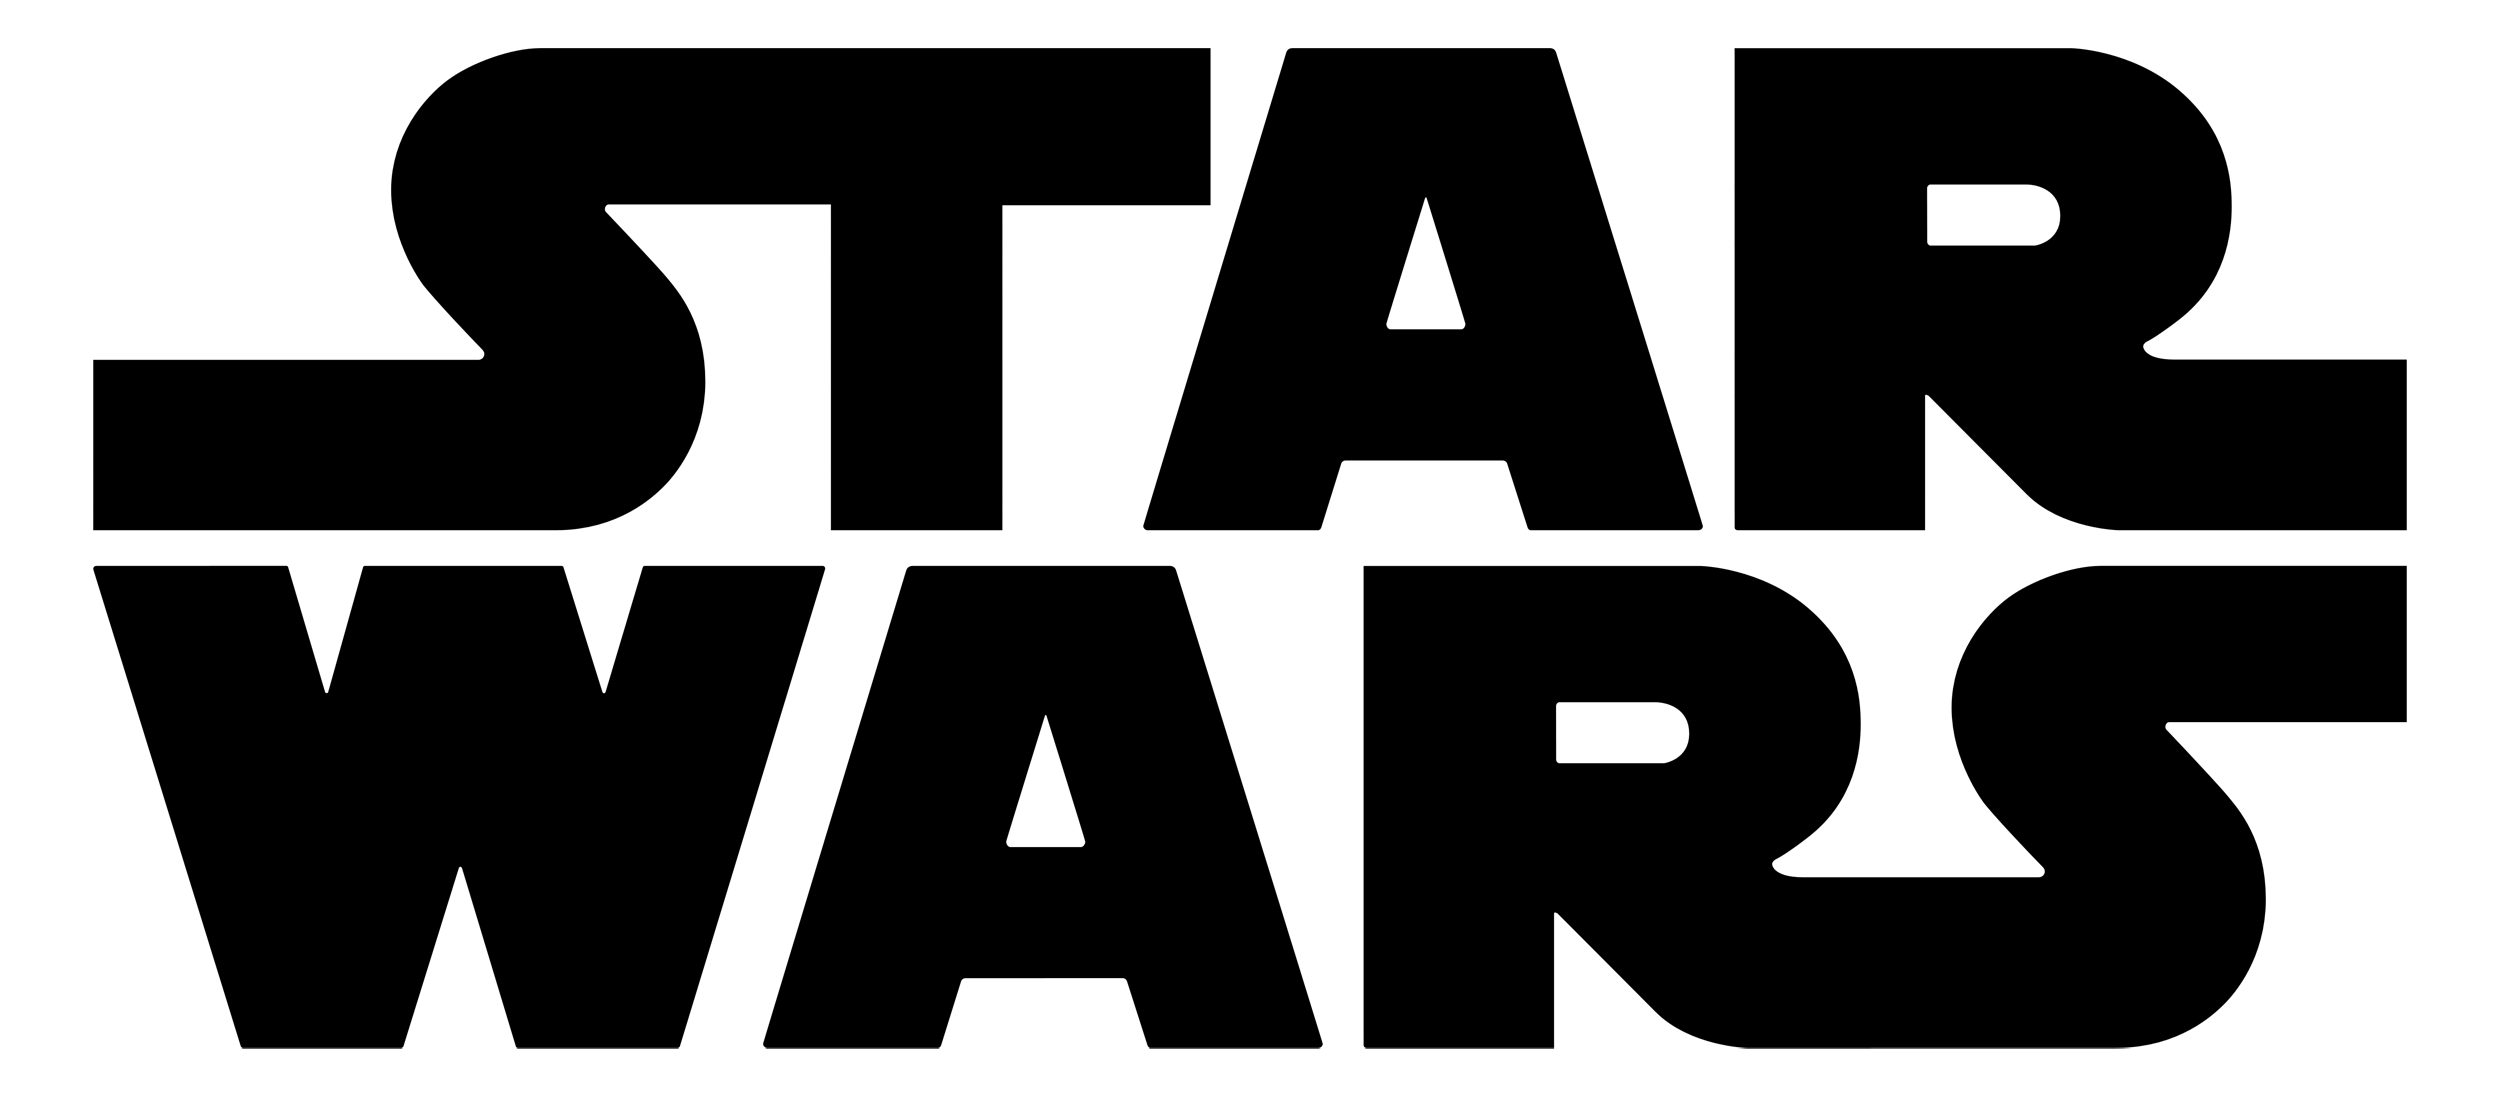 Star Wars Logo - LogoDix